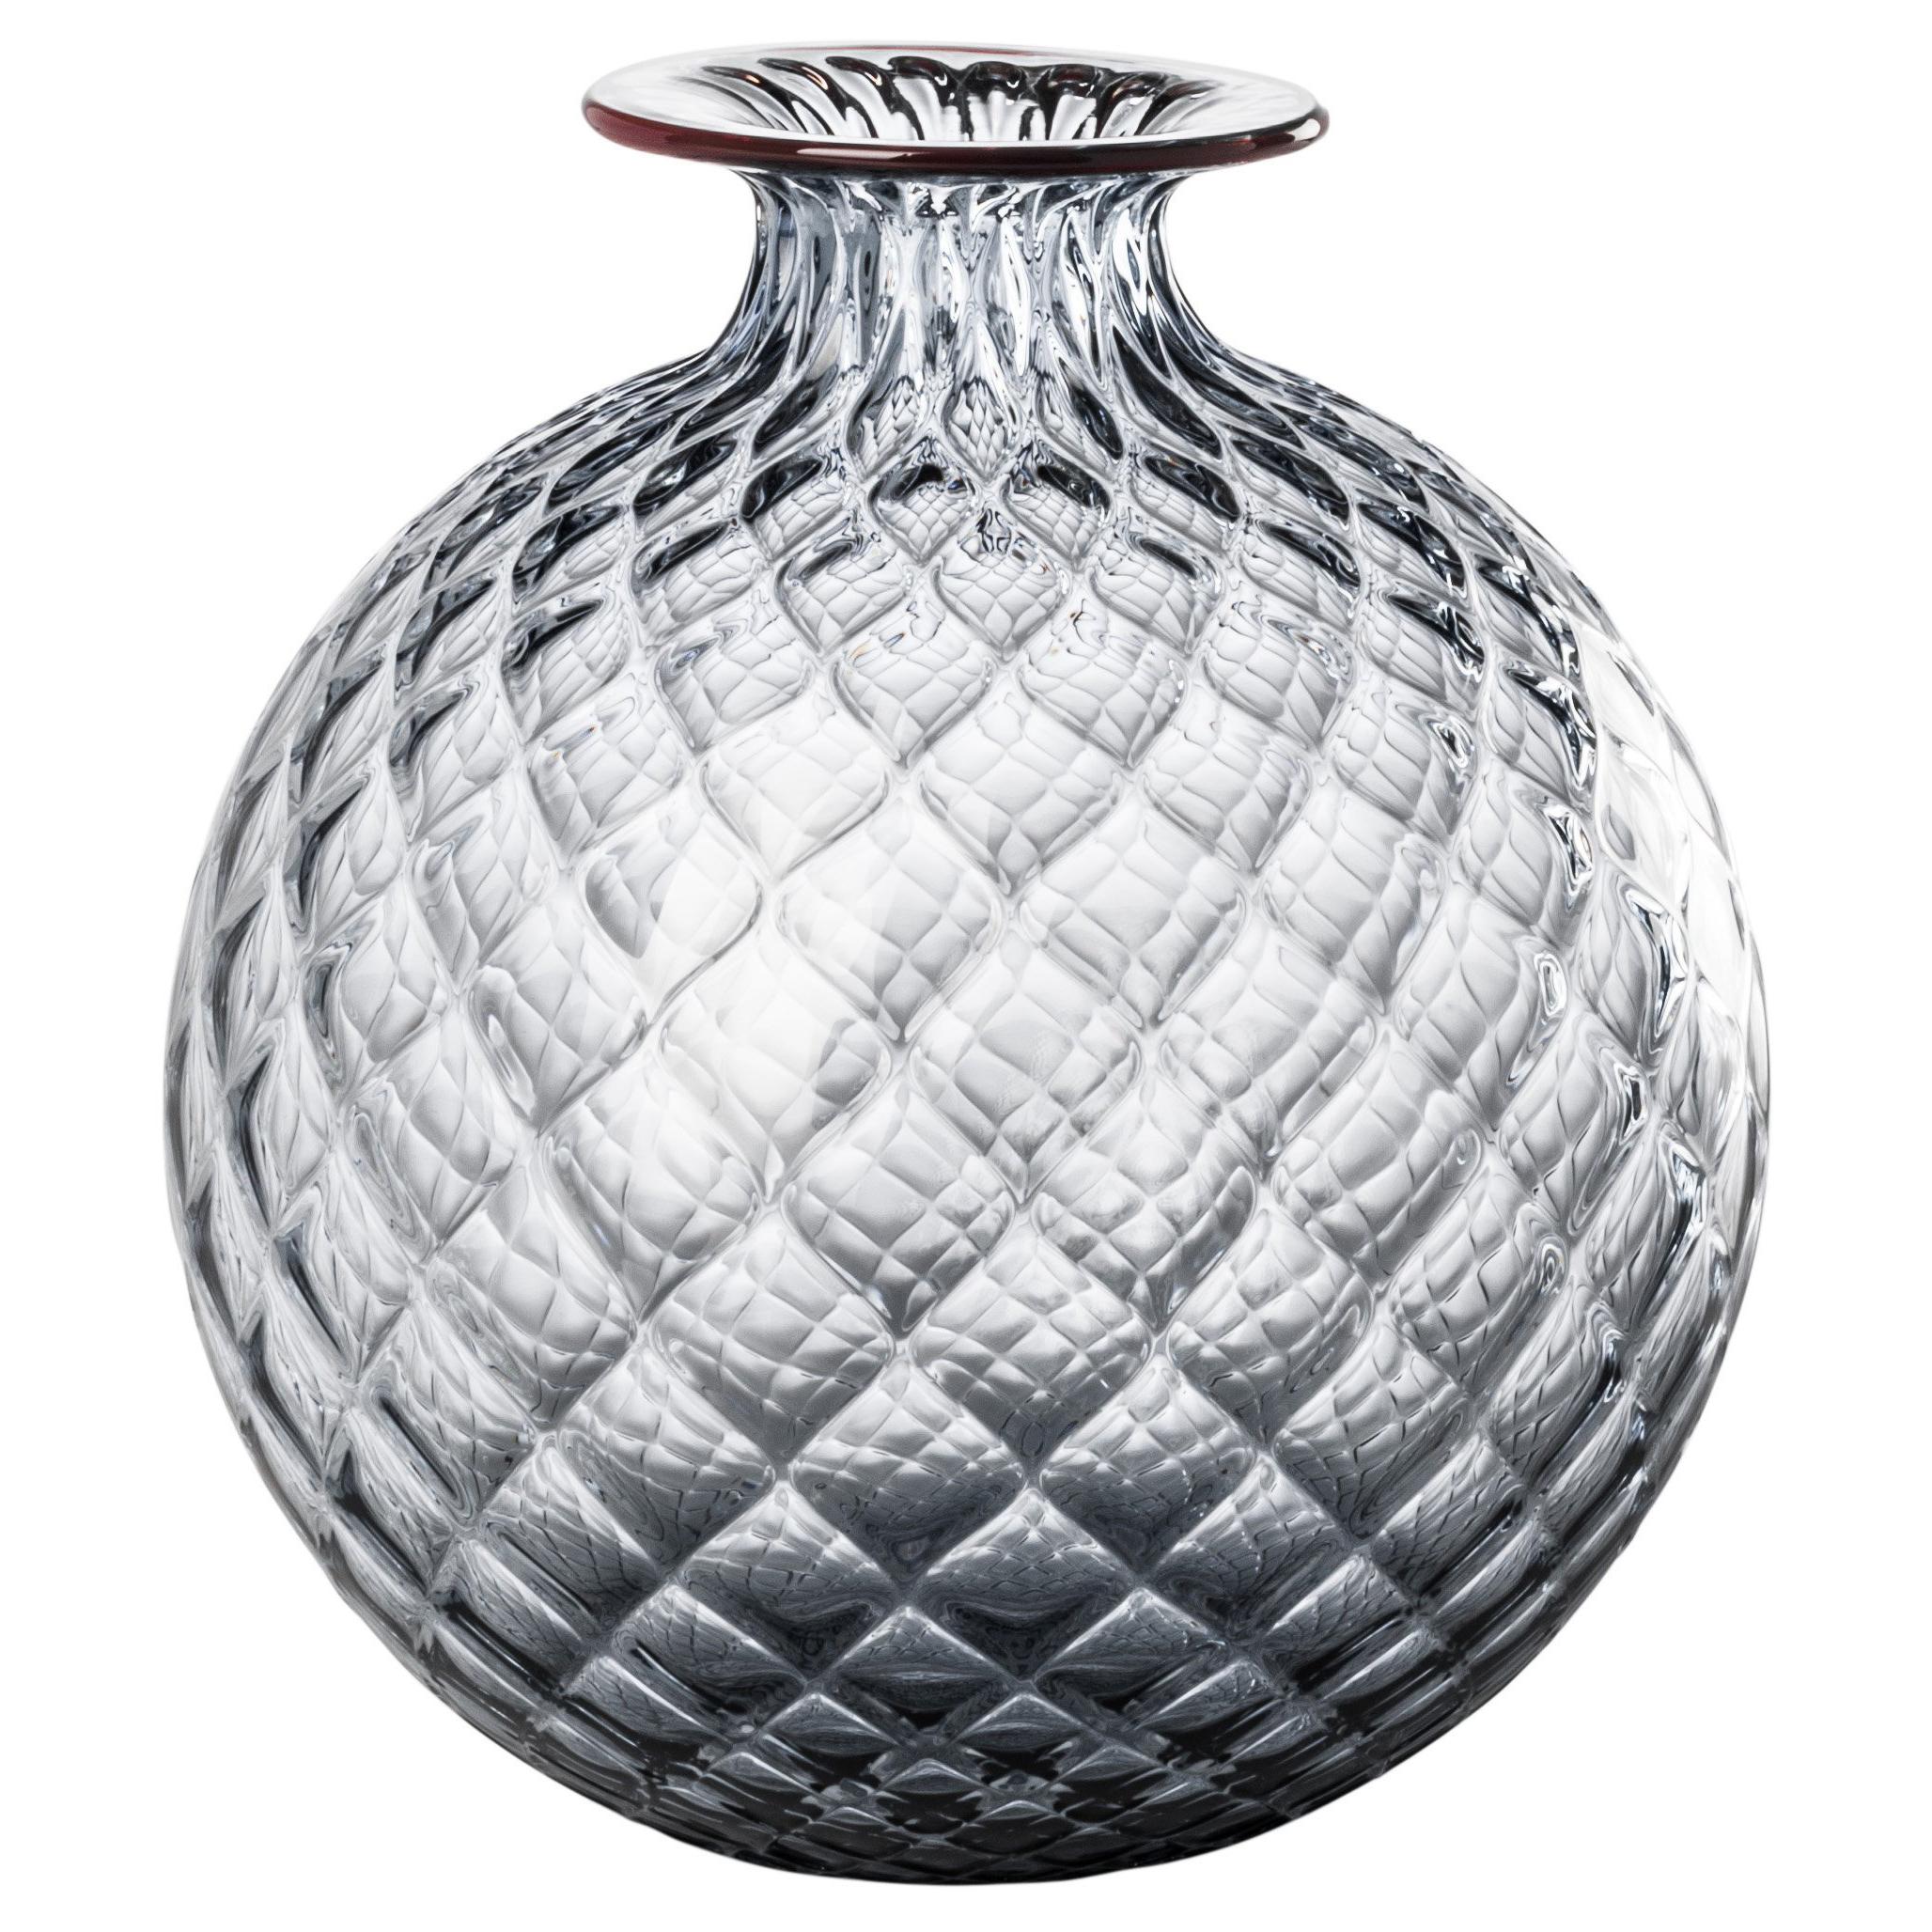 Monofiore Balaton Glass Vase in Grey with Red Thread Rim by Venini